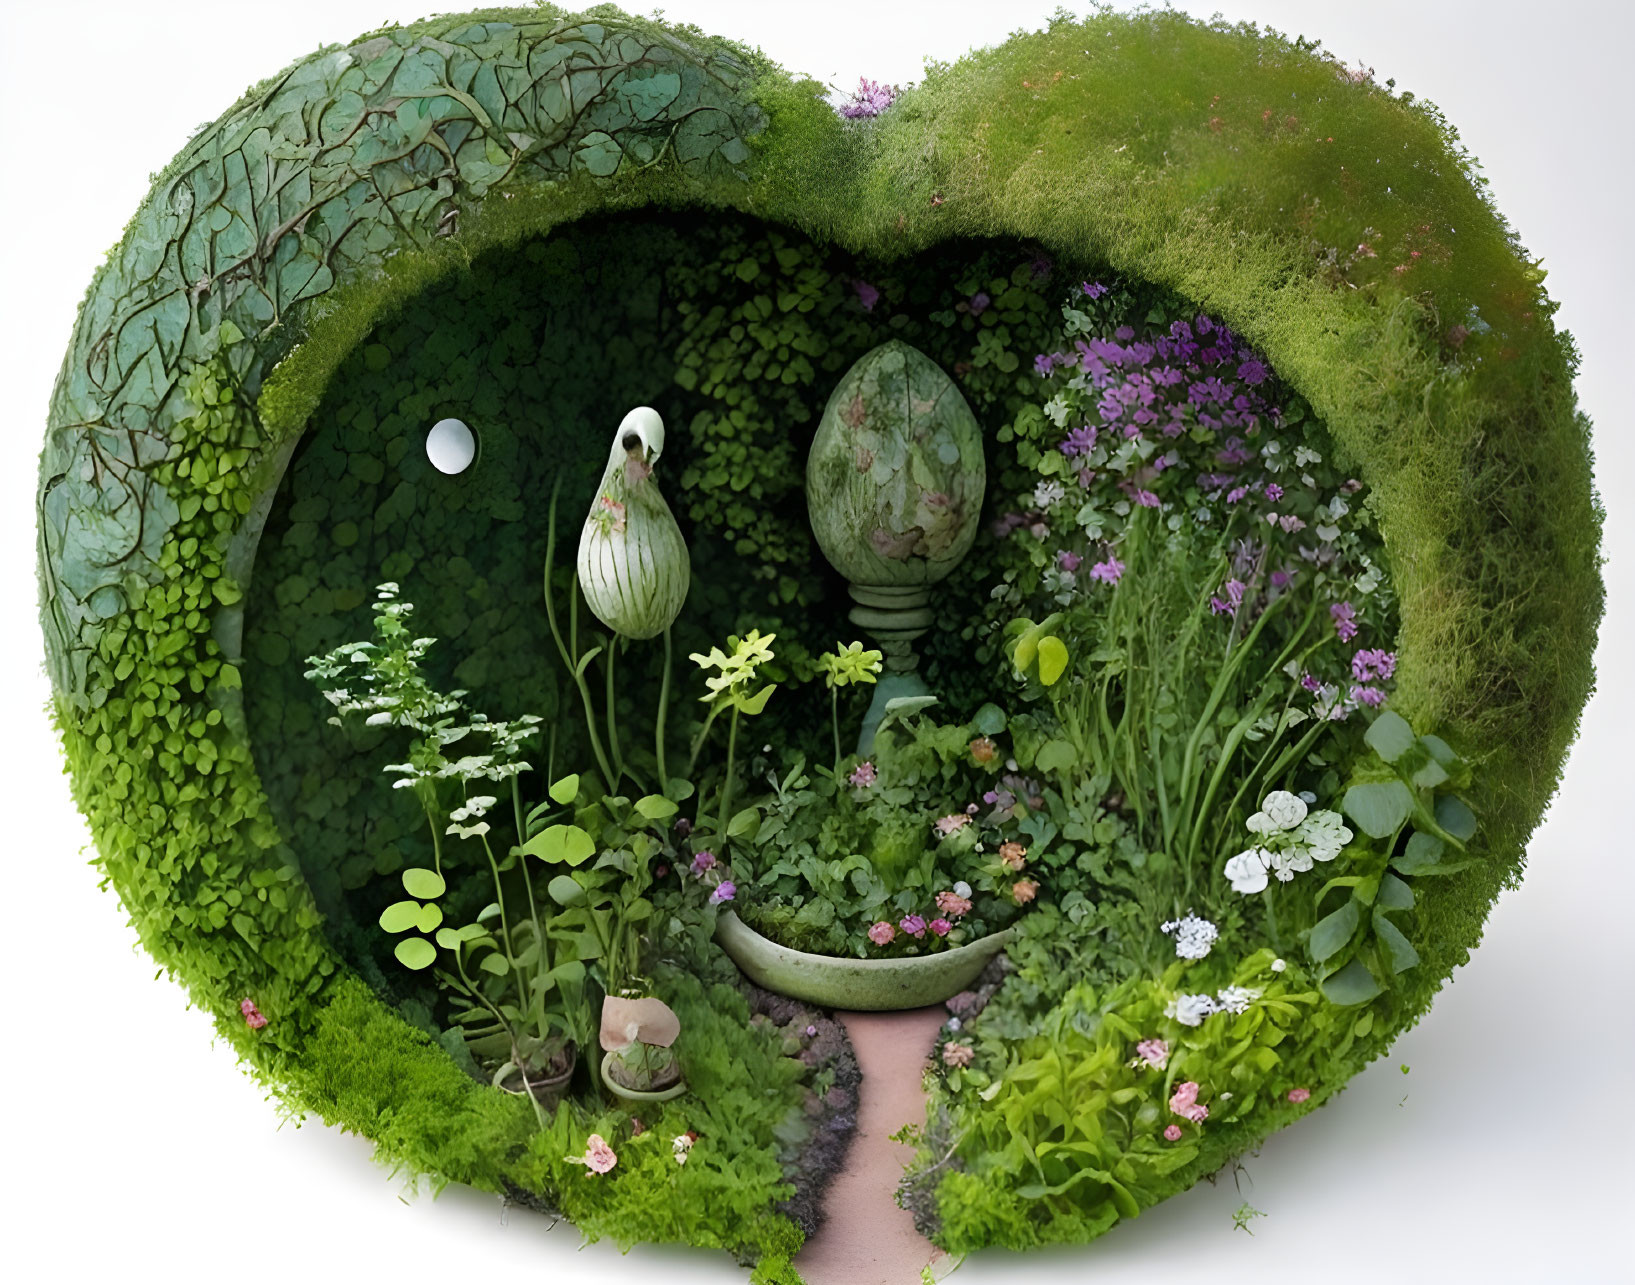 Spiraled hedge garden scene with bird sculpture and ornamental egg